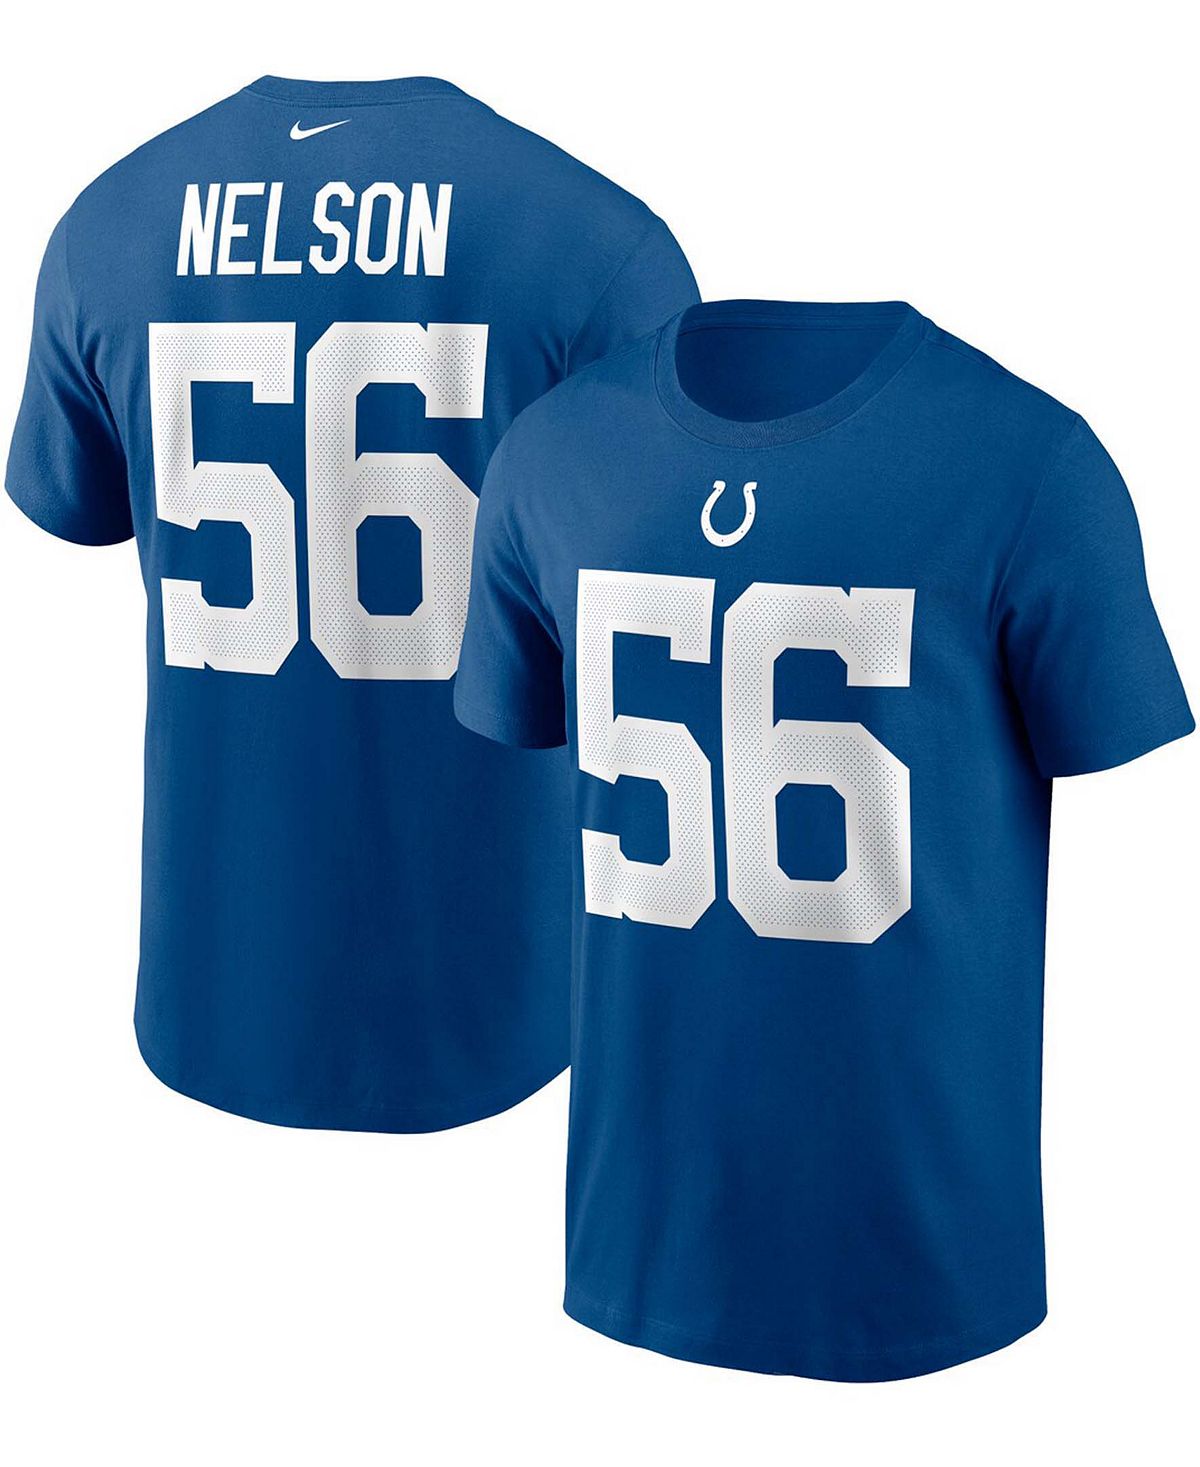 Мужская футболка с именем и номером Quenton Nelson Royal Indianapolis Colts Nike